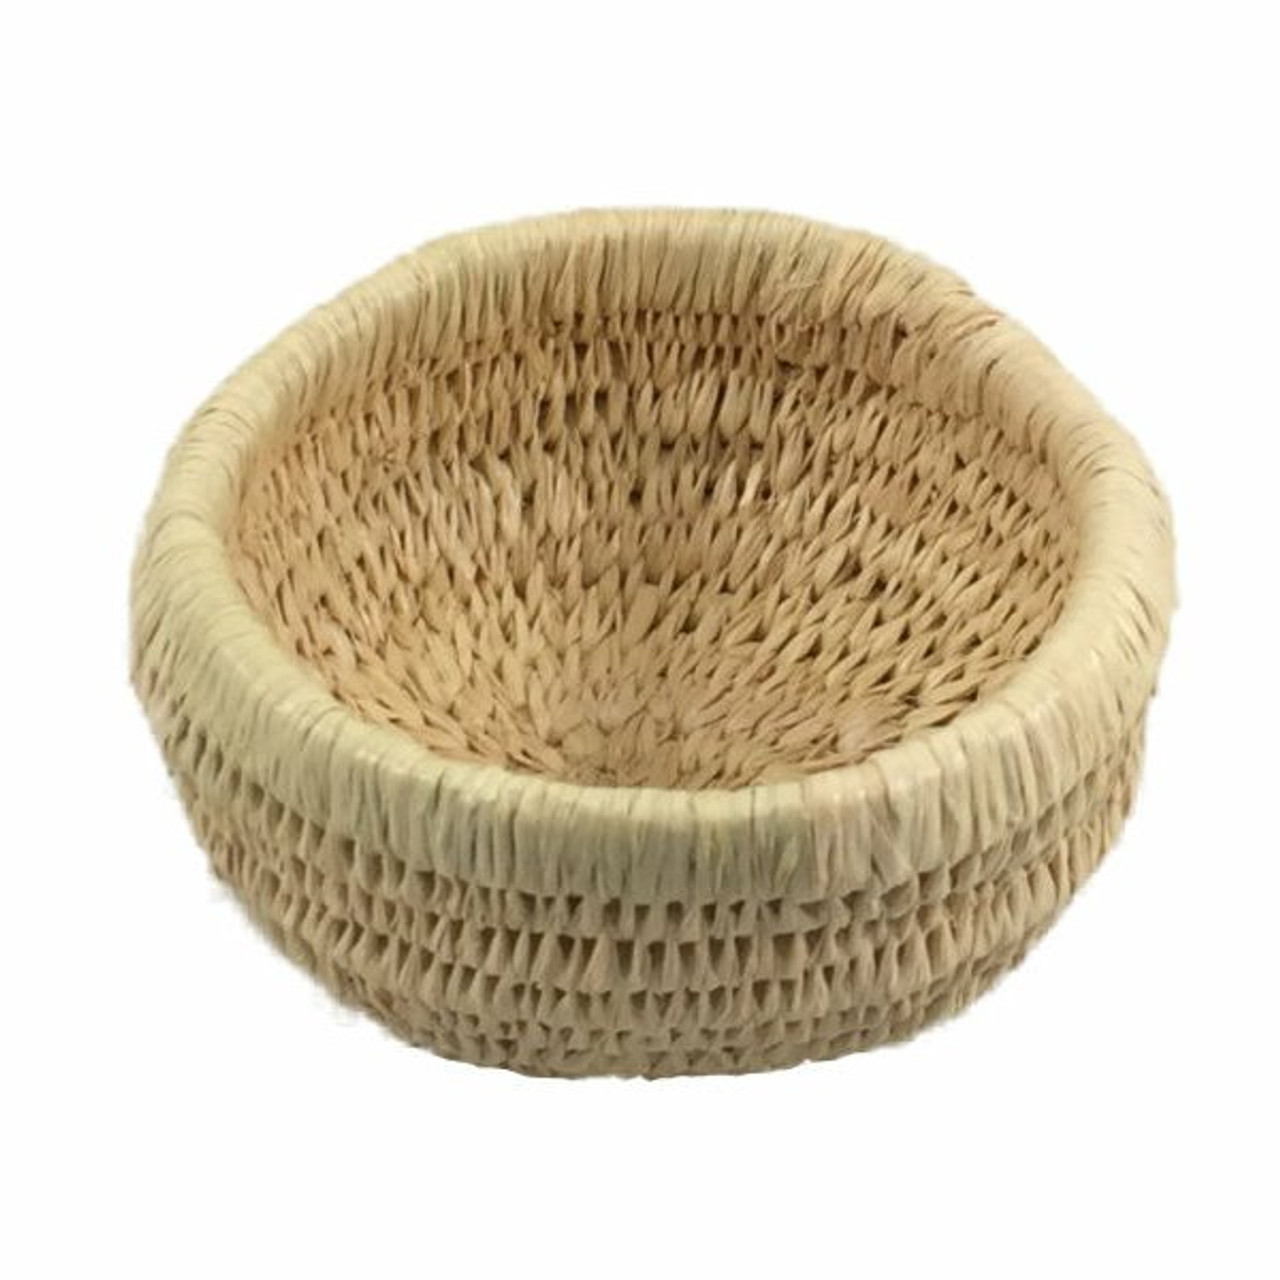 Coiled Basket Kit - Pine Needle